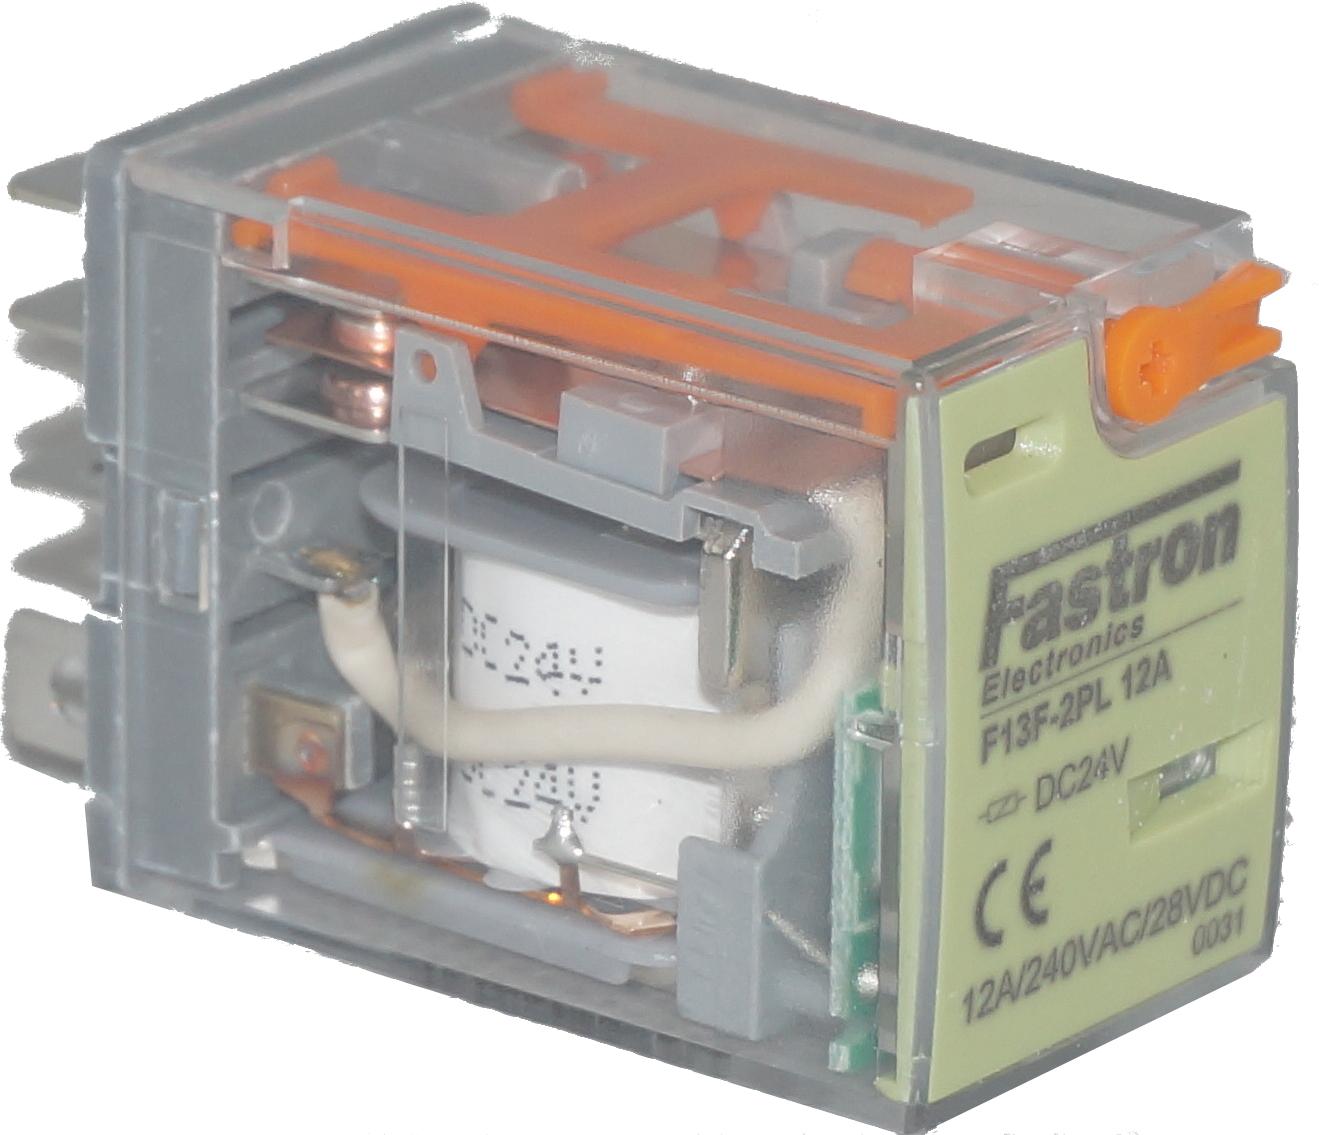 F13F-2PL 12A 24VDC Relay, 2 x 12 Amp Form C, 250VAC/30VDC Load, 240VAC Coil-Relay-Fastron Electronics-Fastron Electronics Store